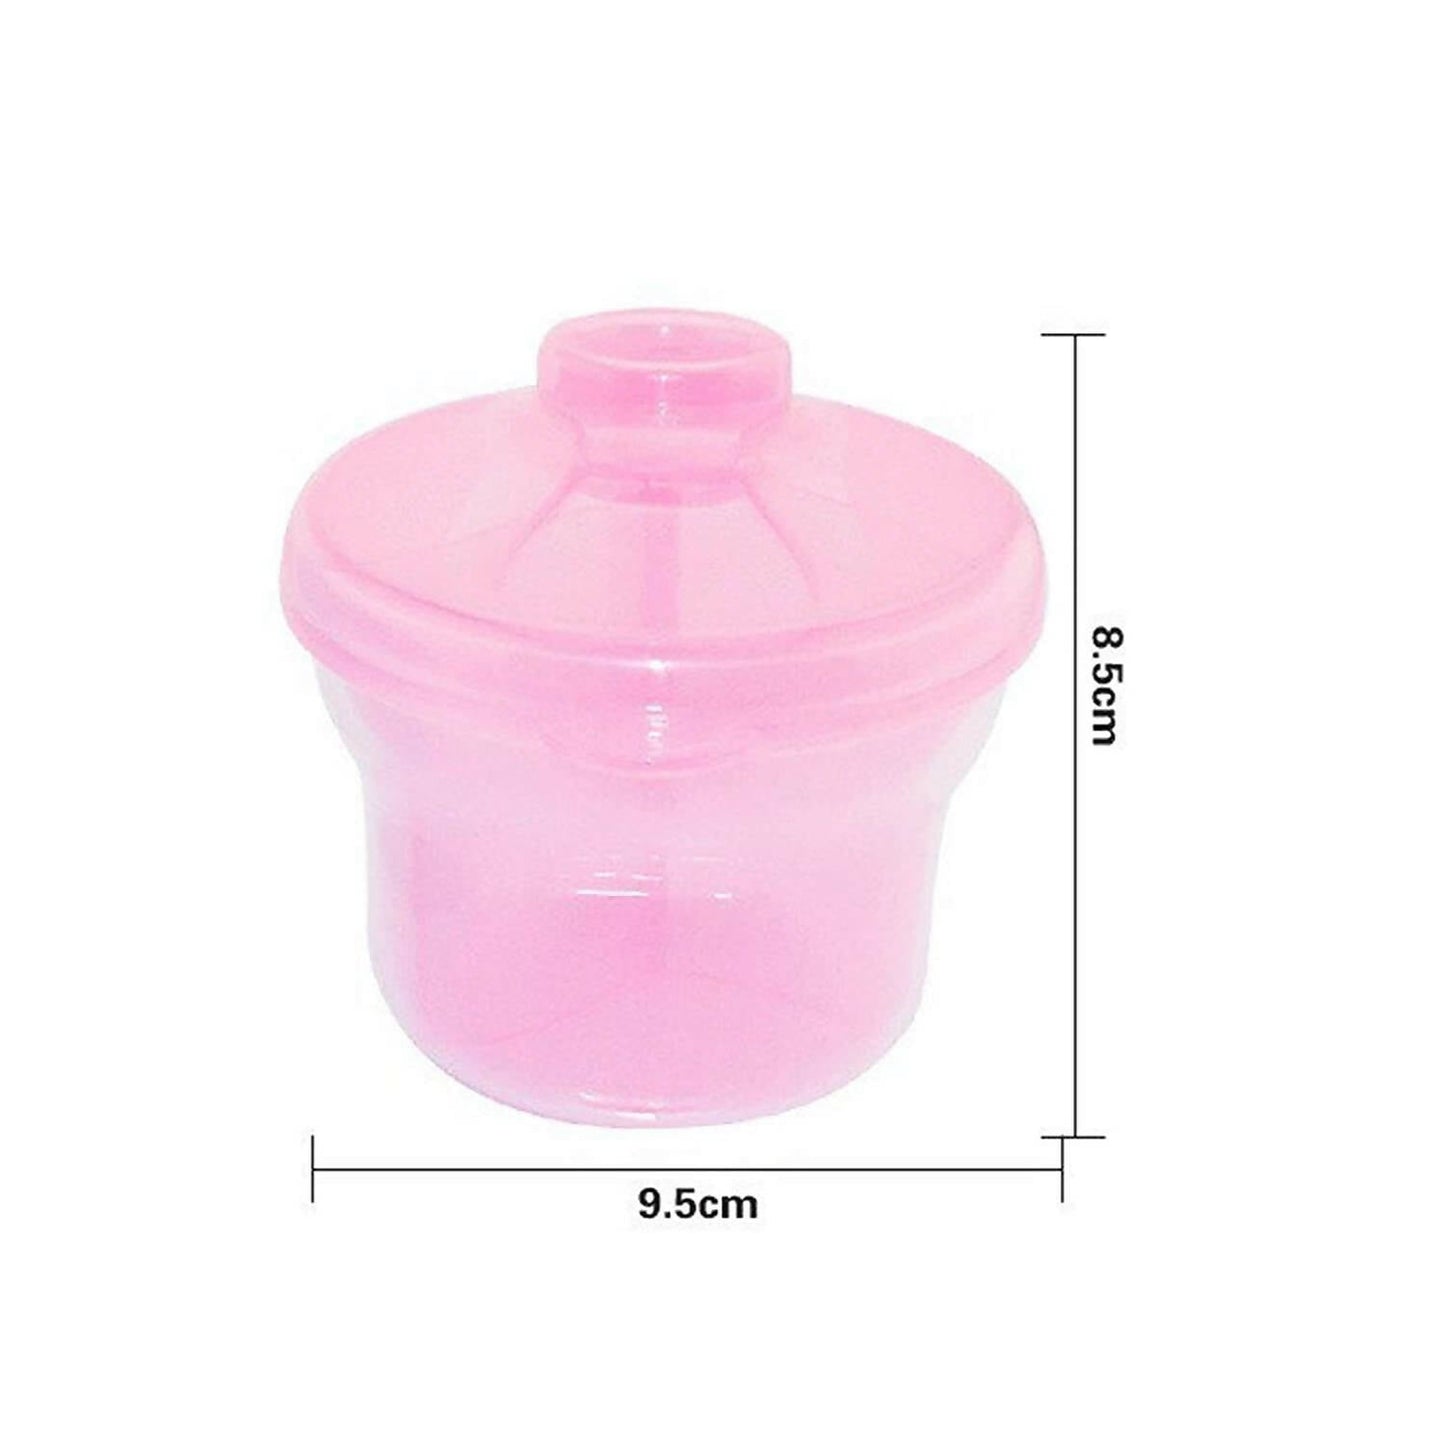 Safe-O-Kid Bpa Free Portable Milk Powderfood Storage Box For Baby, Pink